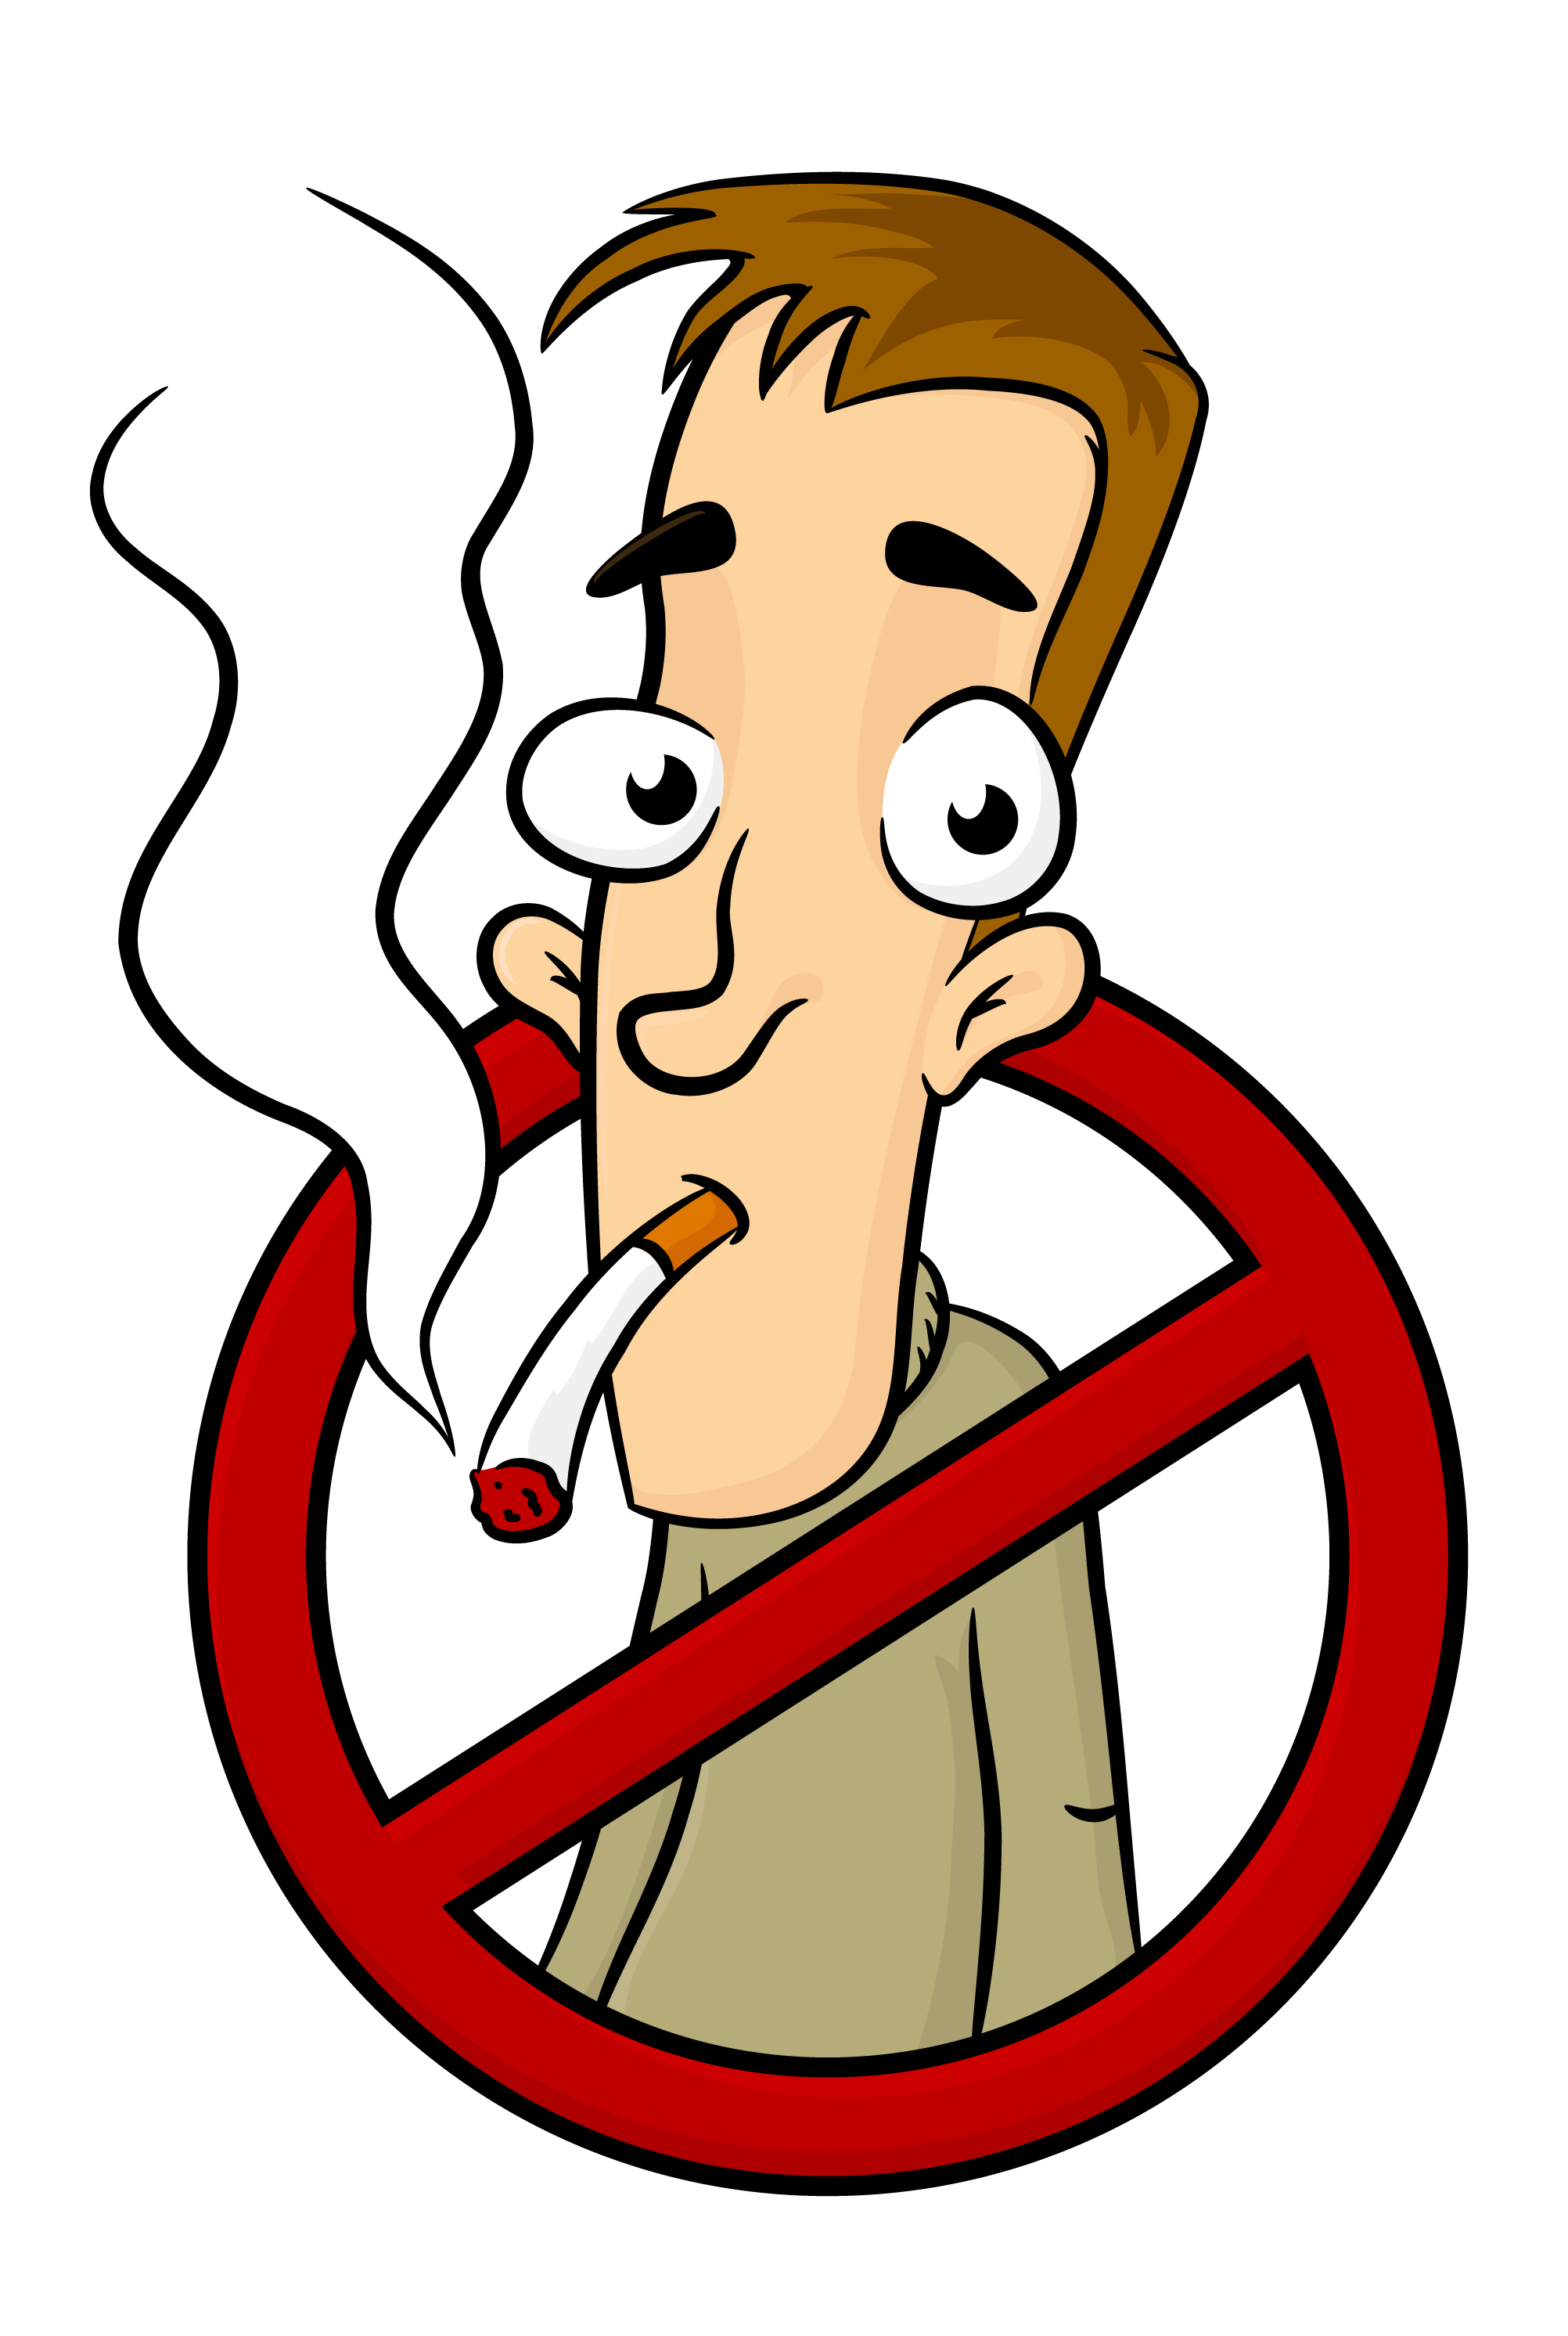 No Smoking Sign Clip Art   Cliparts Co